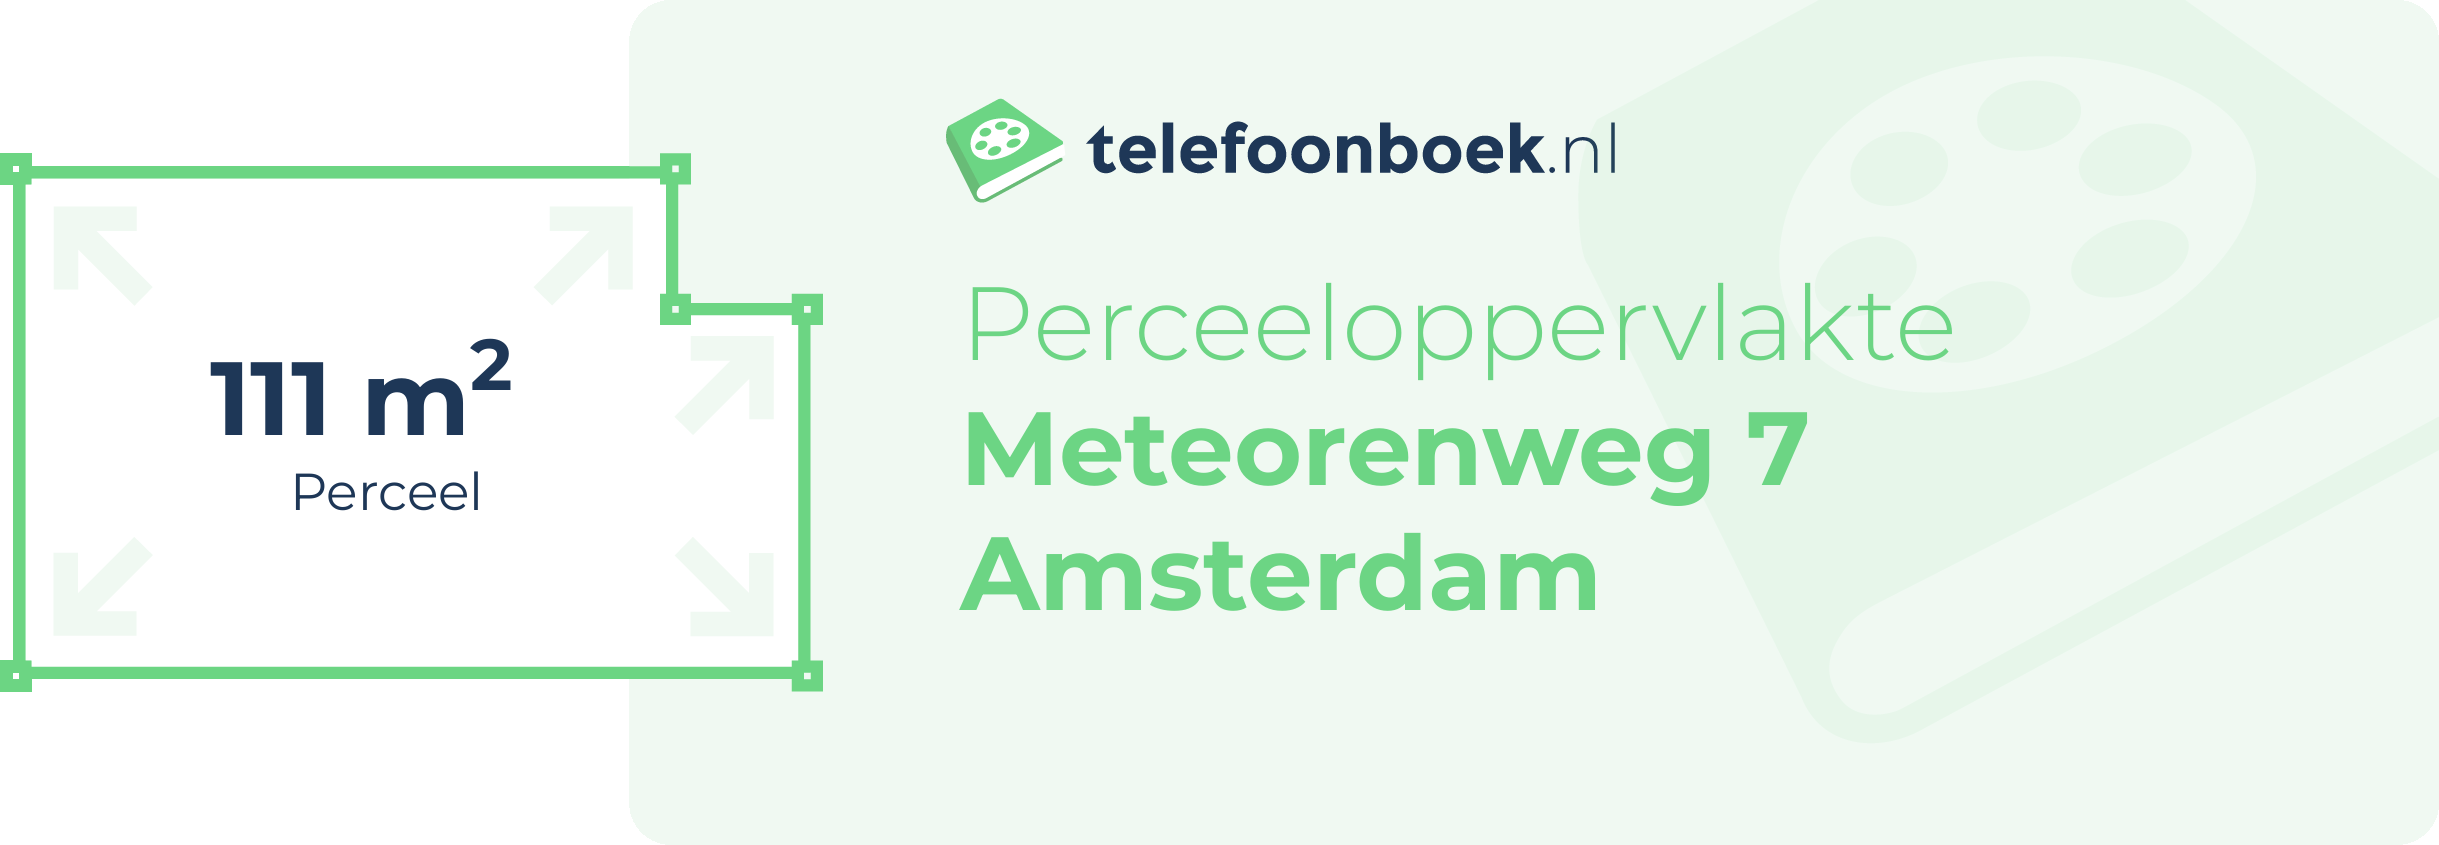 Perceeloppervlakte Meteorenweg 7 Amsterdam